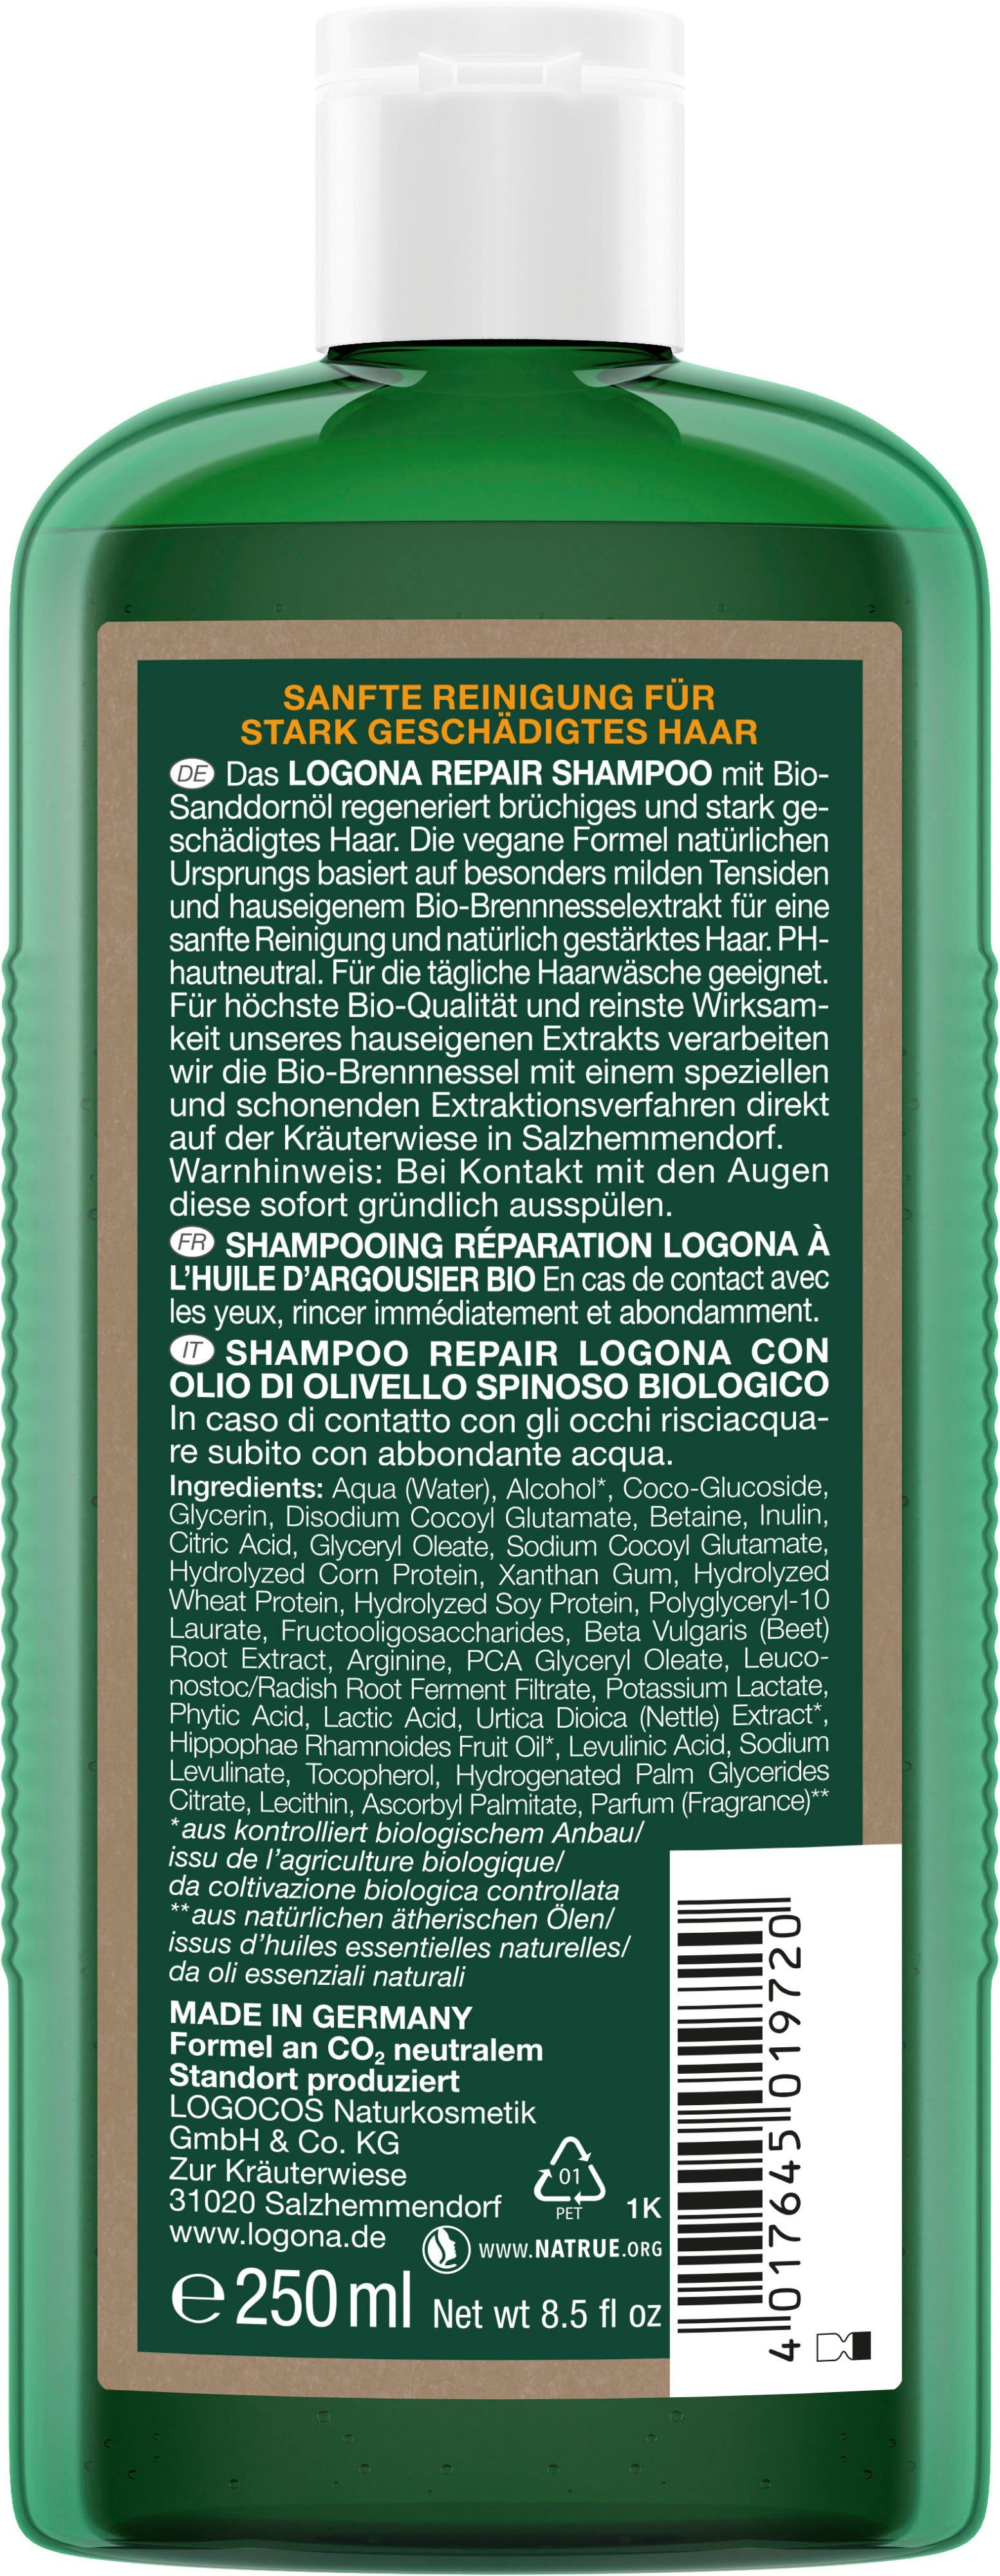 LOGONA Haarshampoo Logona Bio-Sanddorn Shampoo Repair&Pflege